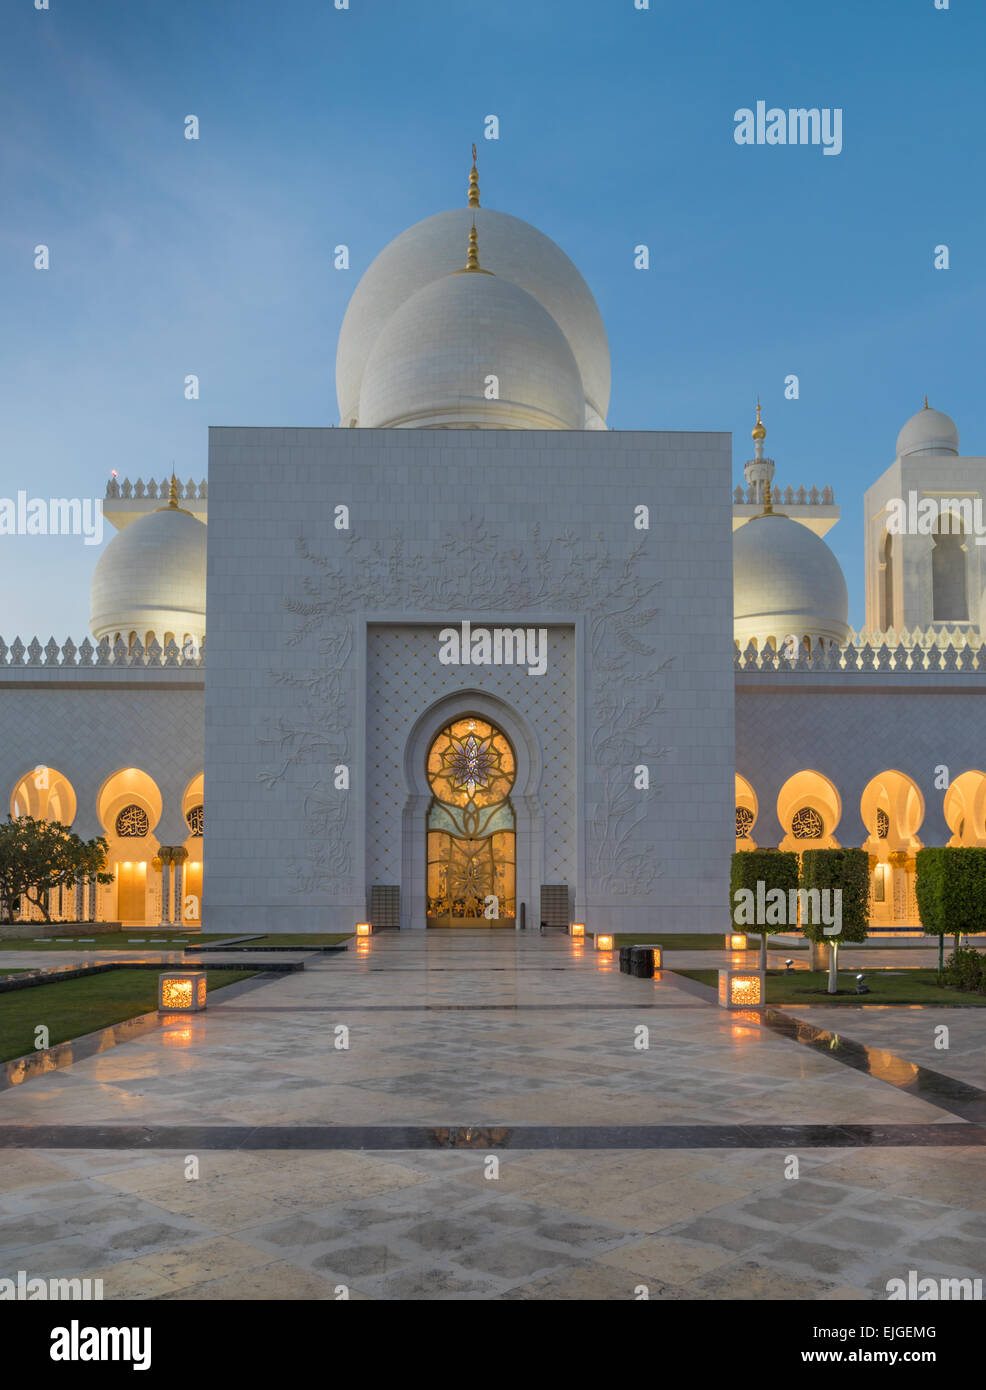 Sheikh Grand Mosque in Abu Dhabi Stock Photo